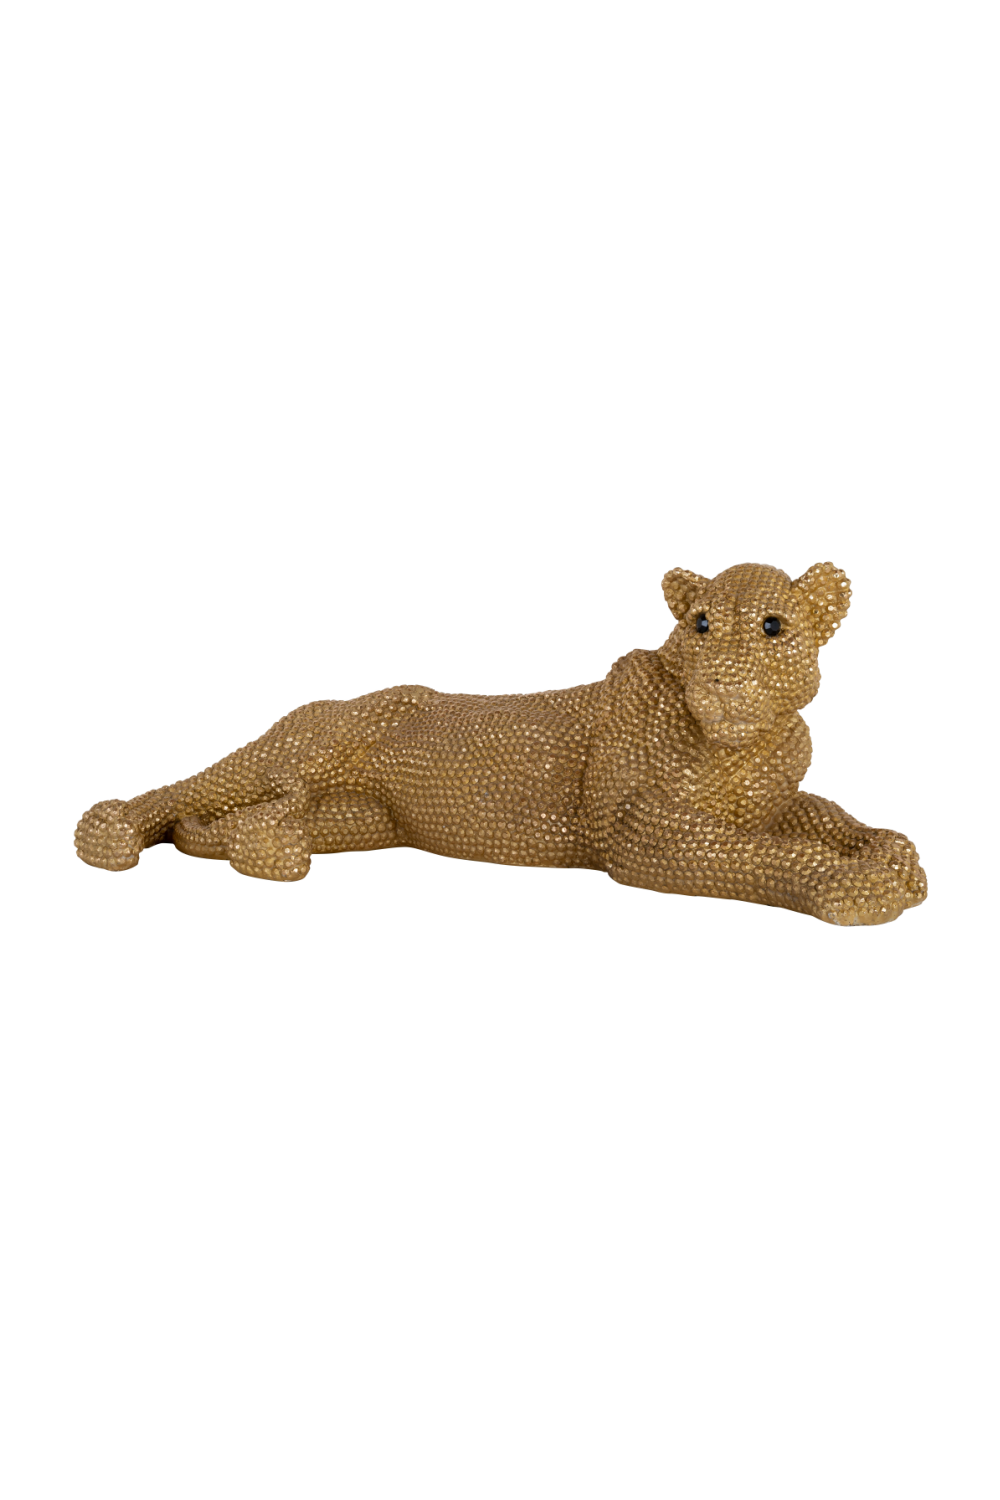 Gold Polyresin Animal Deco Object | OROA Lion | OROA.com